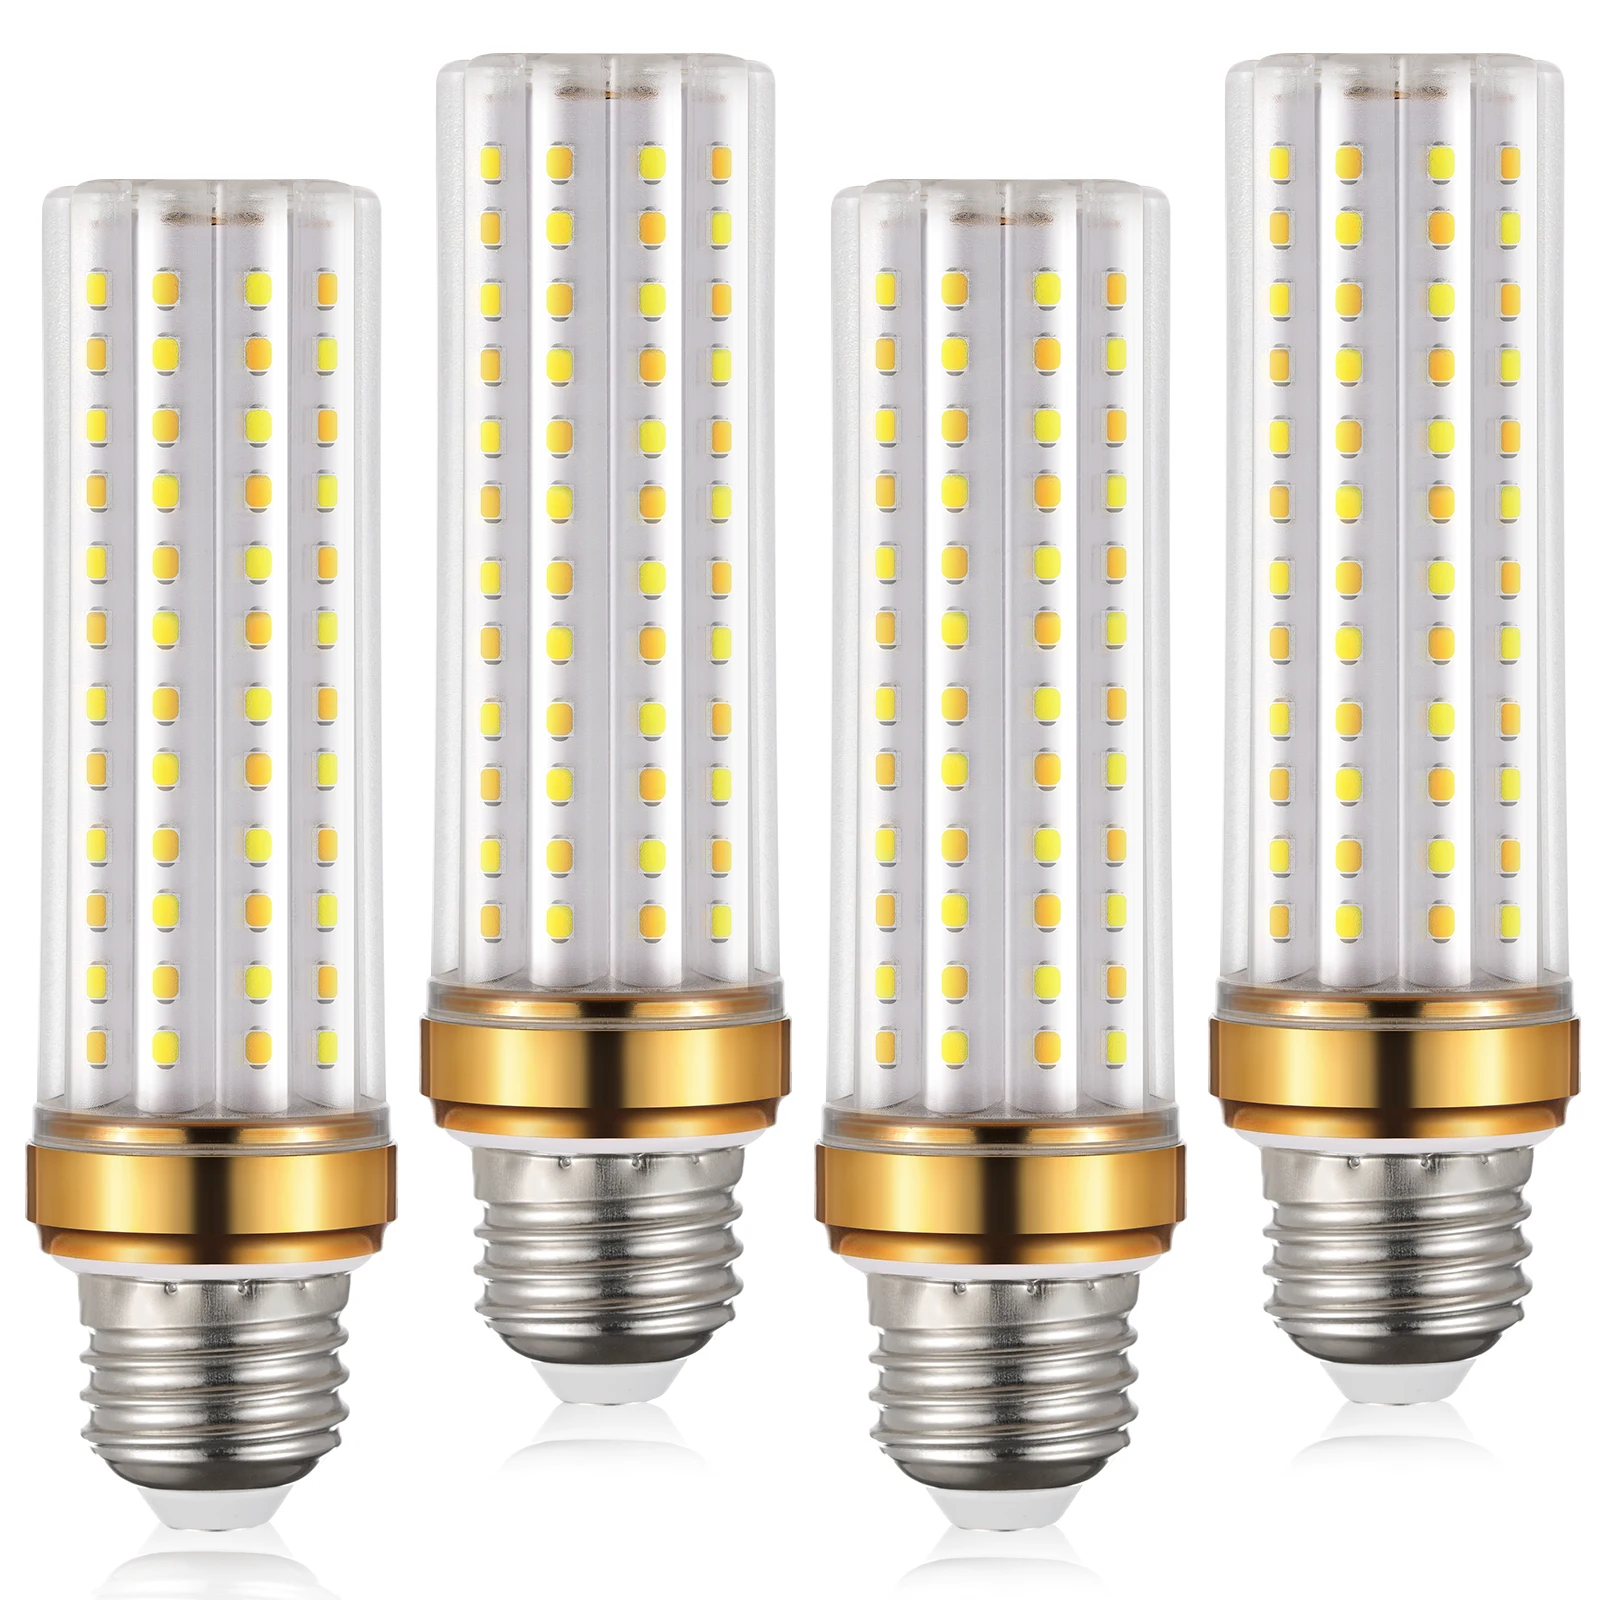 

4Pcs E26 Led Corn Light bulb, 85-265V,24W (250W halogen equivalent), E26Led bulb no flicker chandelier, indoor lighting